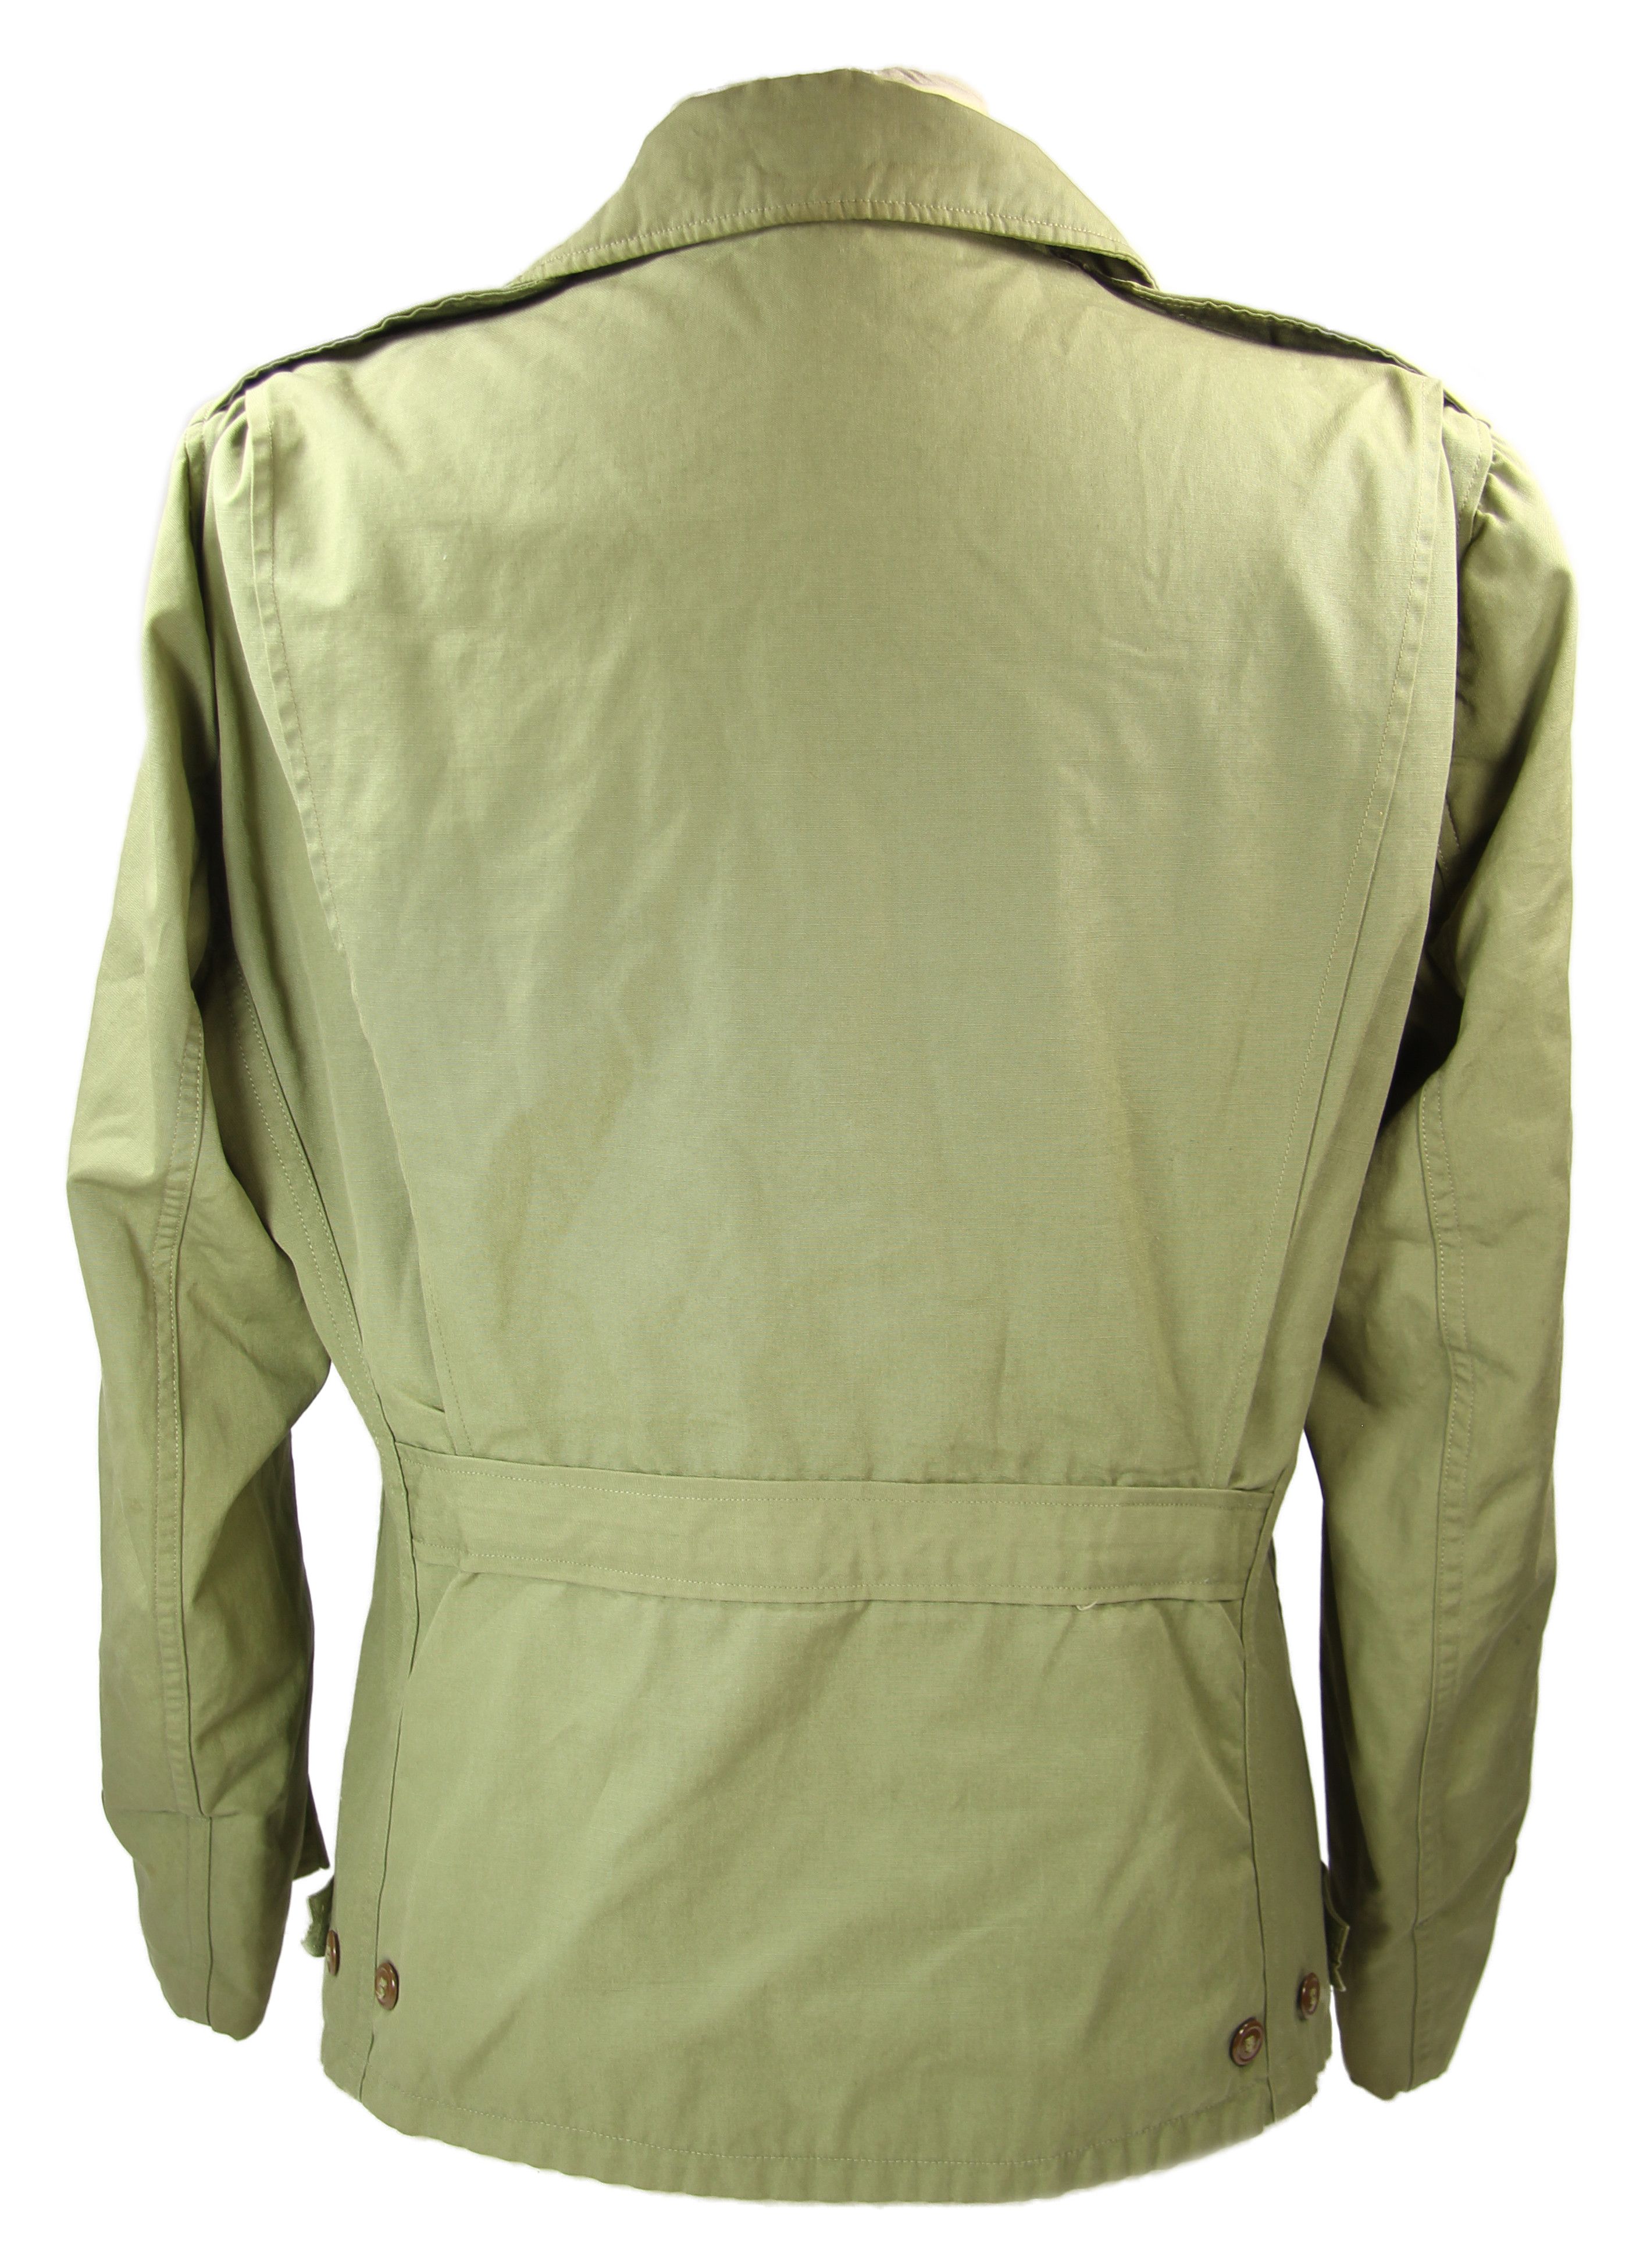 Jacket, Field, M-1941, Wac / Nurse